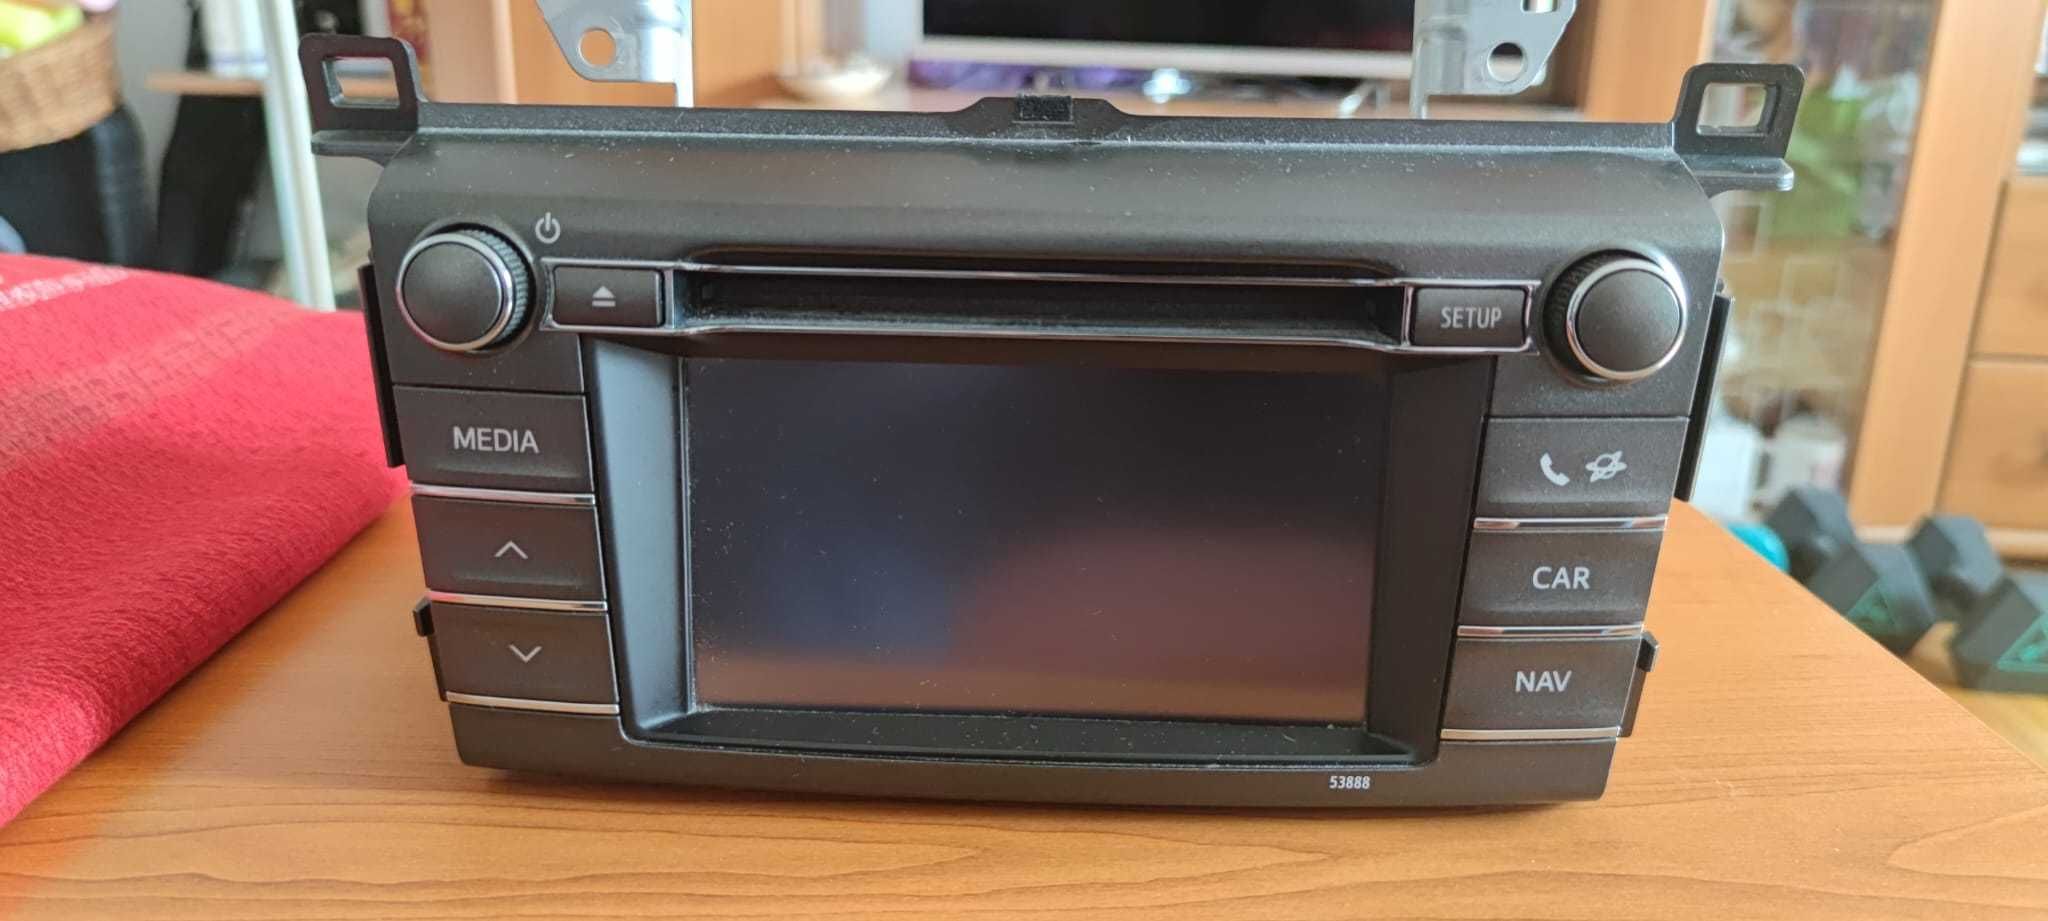 Vând sistem multimedia original Panasonic pentru Toyota RAV4